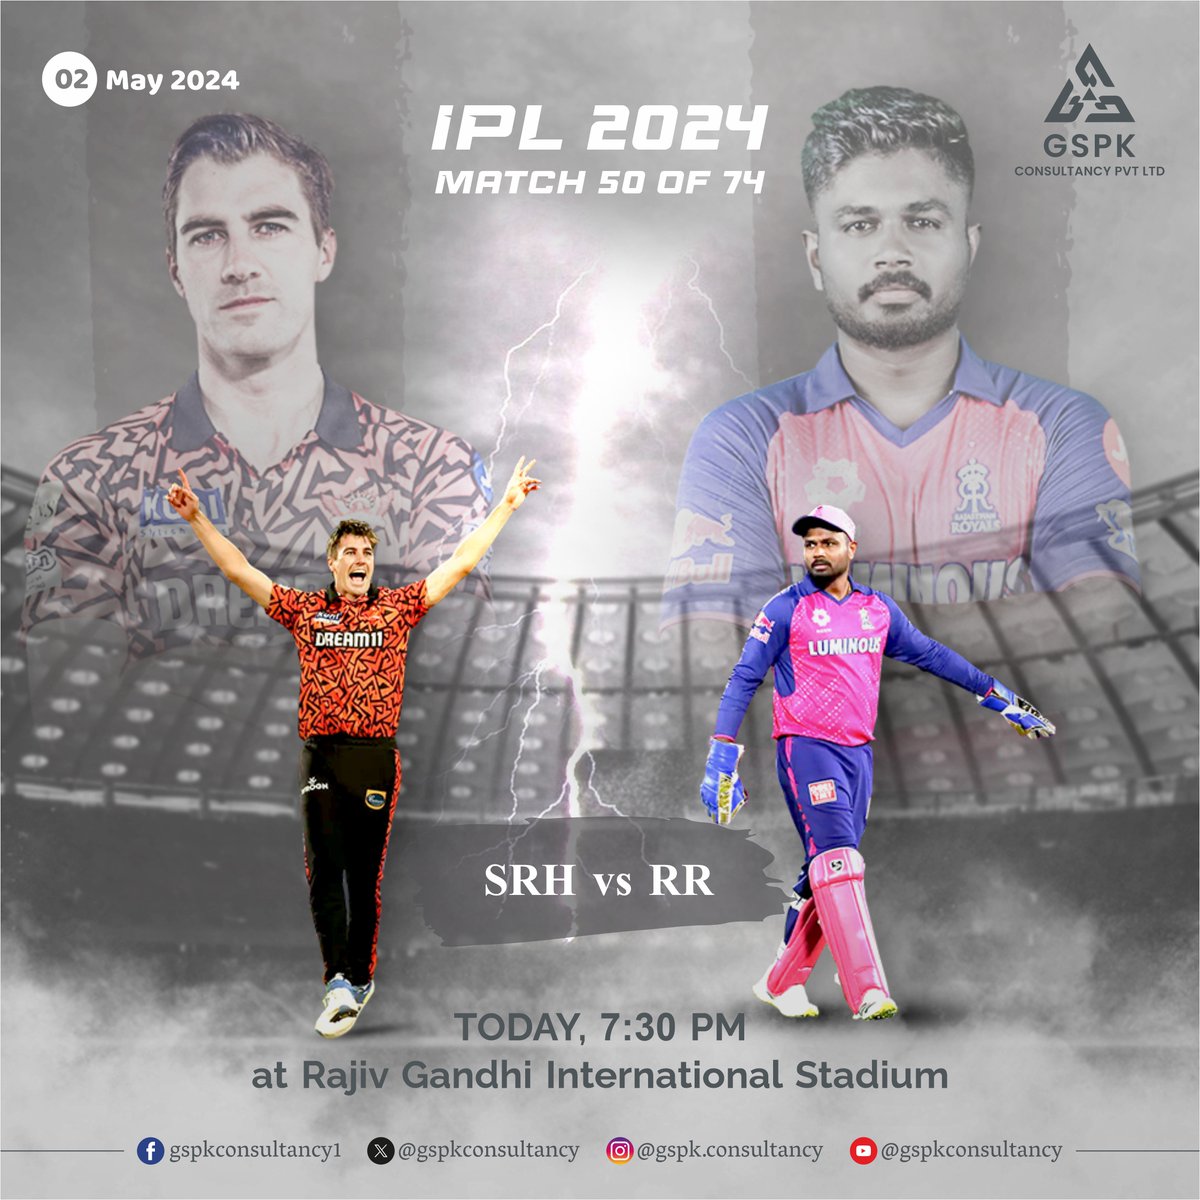 The Clash of two Power Houses

#Matchday #IPL #IPL2024 #SRHvsRR
#GSPK #GspkConsultancy #socialmediaagency #digitalmarketing #digitalmedia #socialmediamarketing #socialmediastrategy 

@IPL @SunRisers @rajasthanroyals